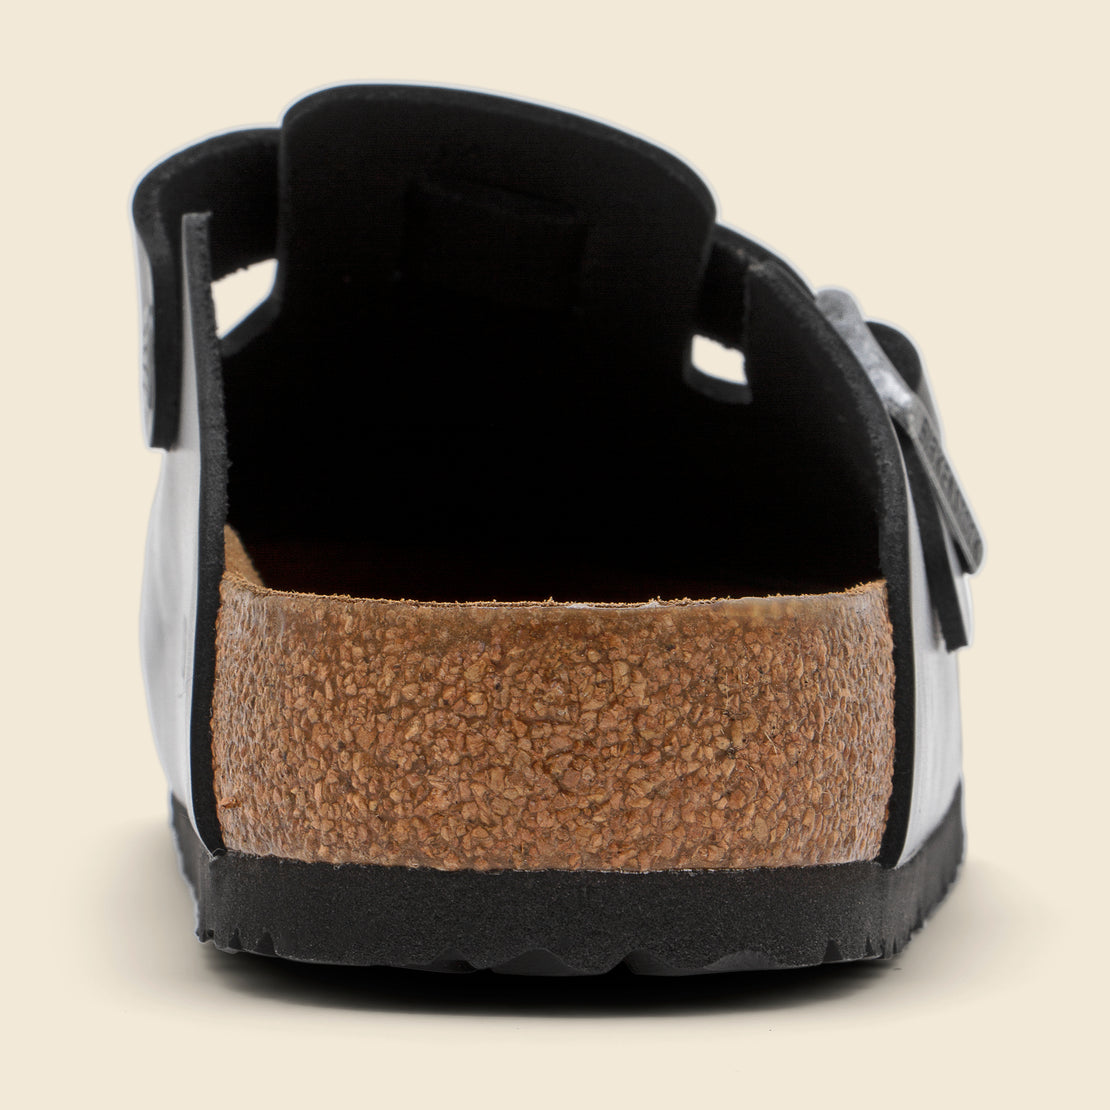 Boston Leather Clog - Amalfi Black - Birkenstock - STAG Provisions - Shoes - Sandals / Flops